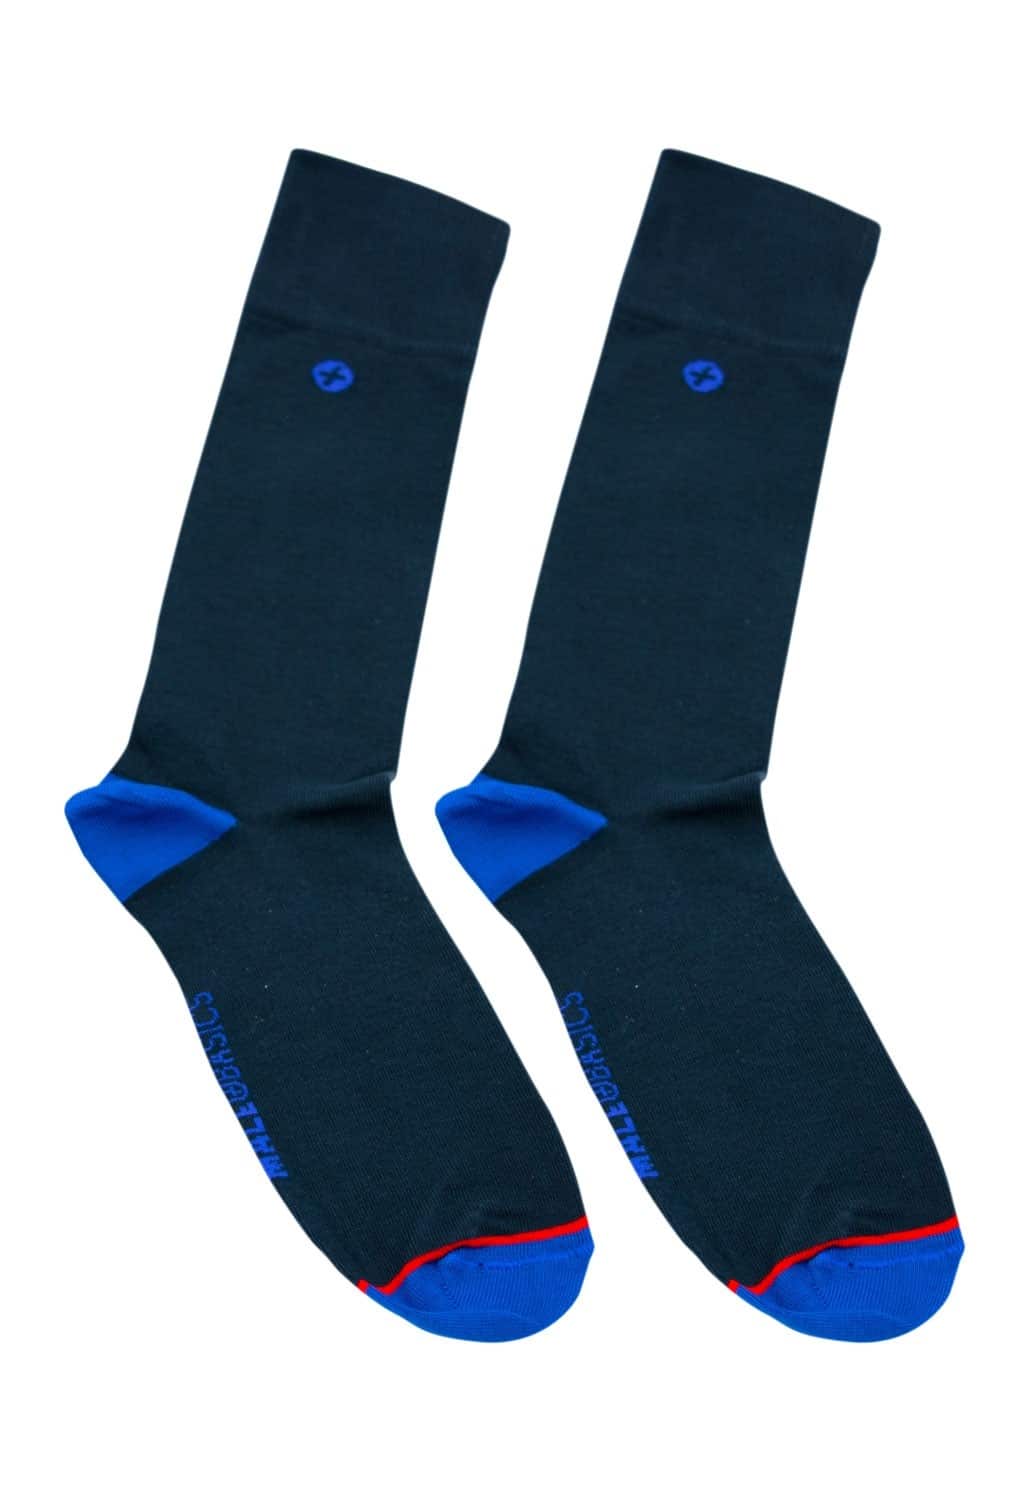 Malebasics Dress Socks - Navy